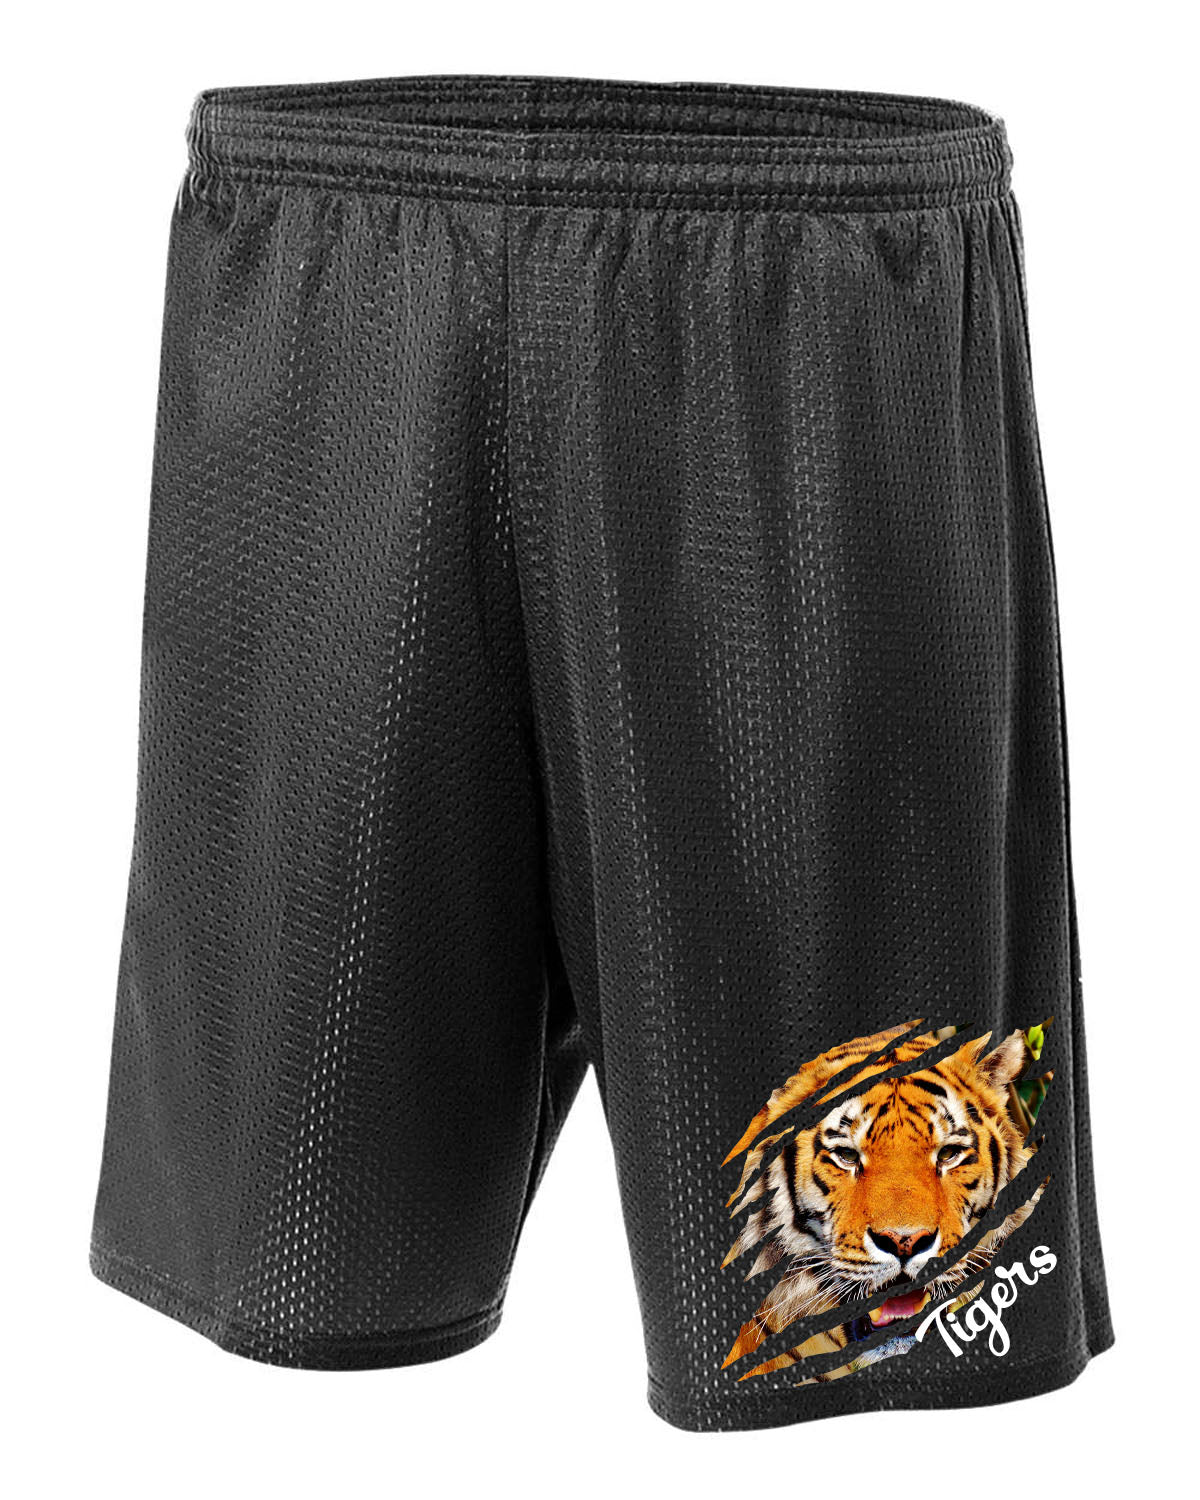 Lafayette Tigers Design 10 Mesh Shorts